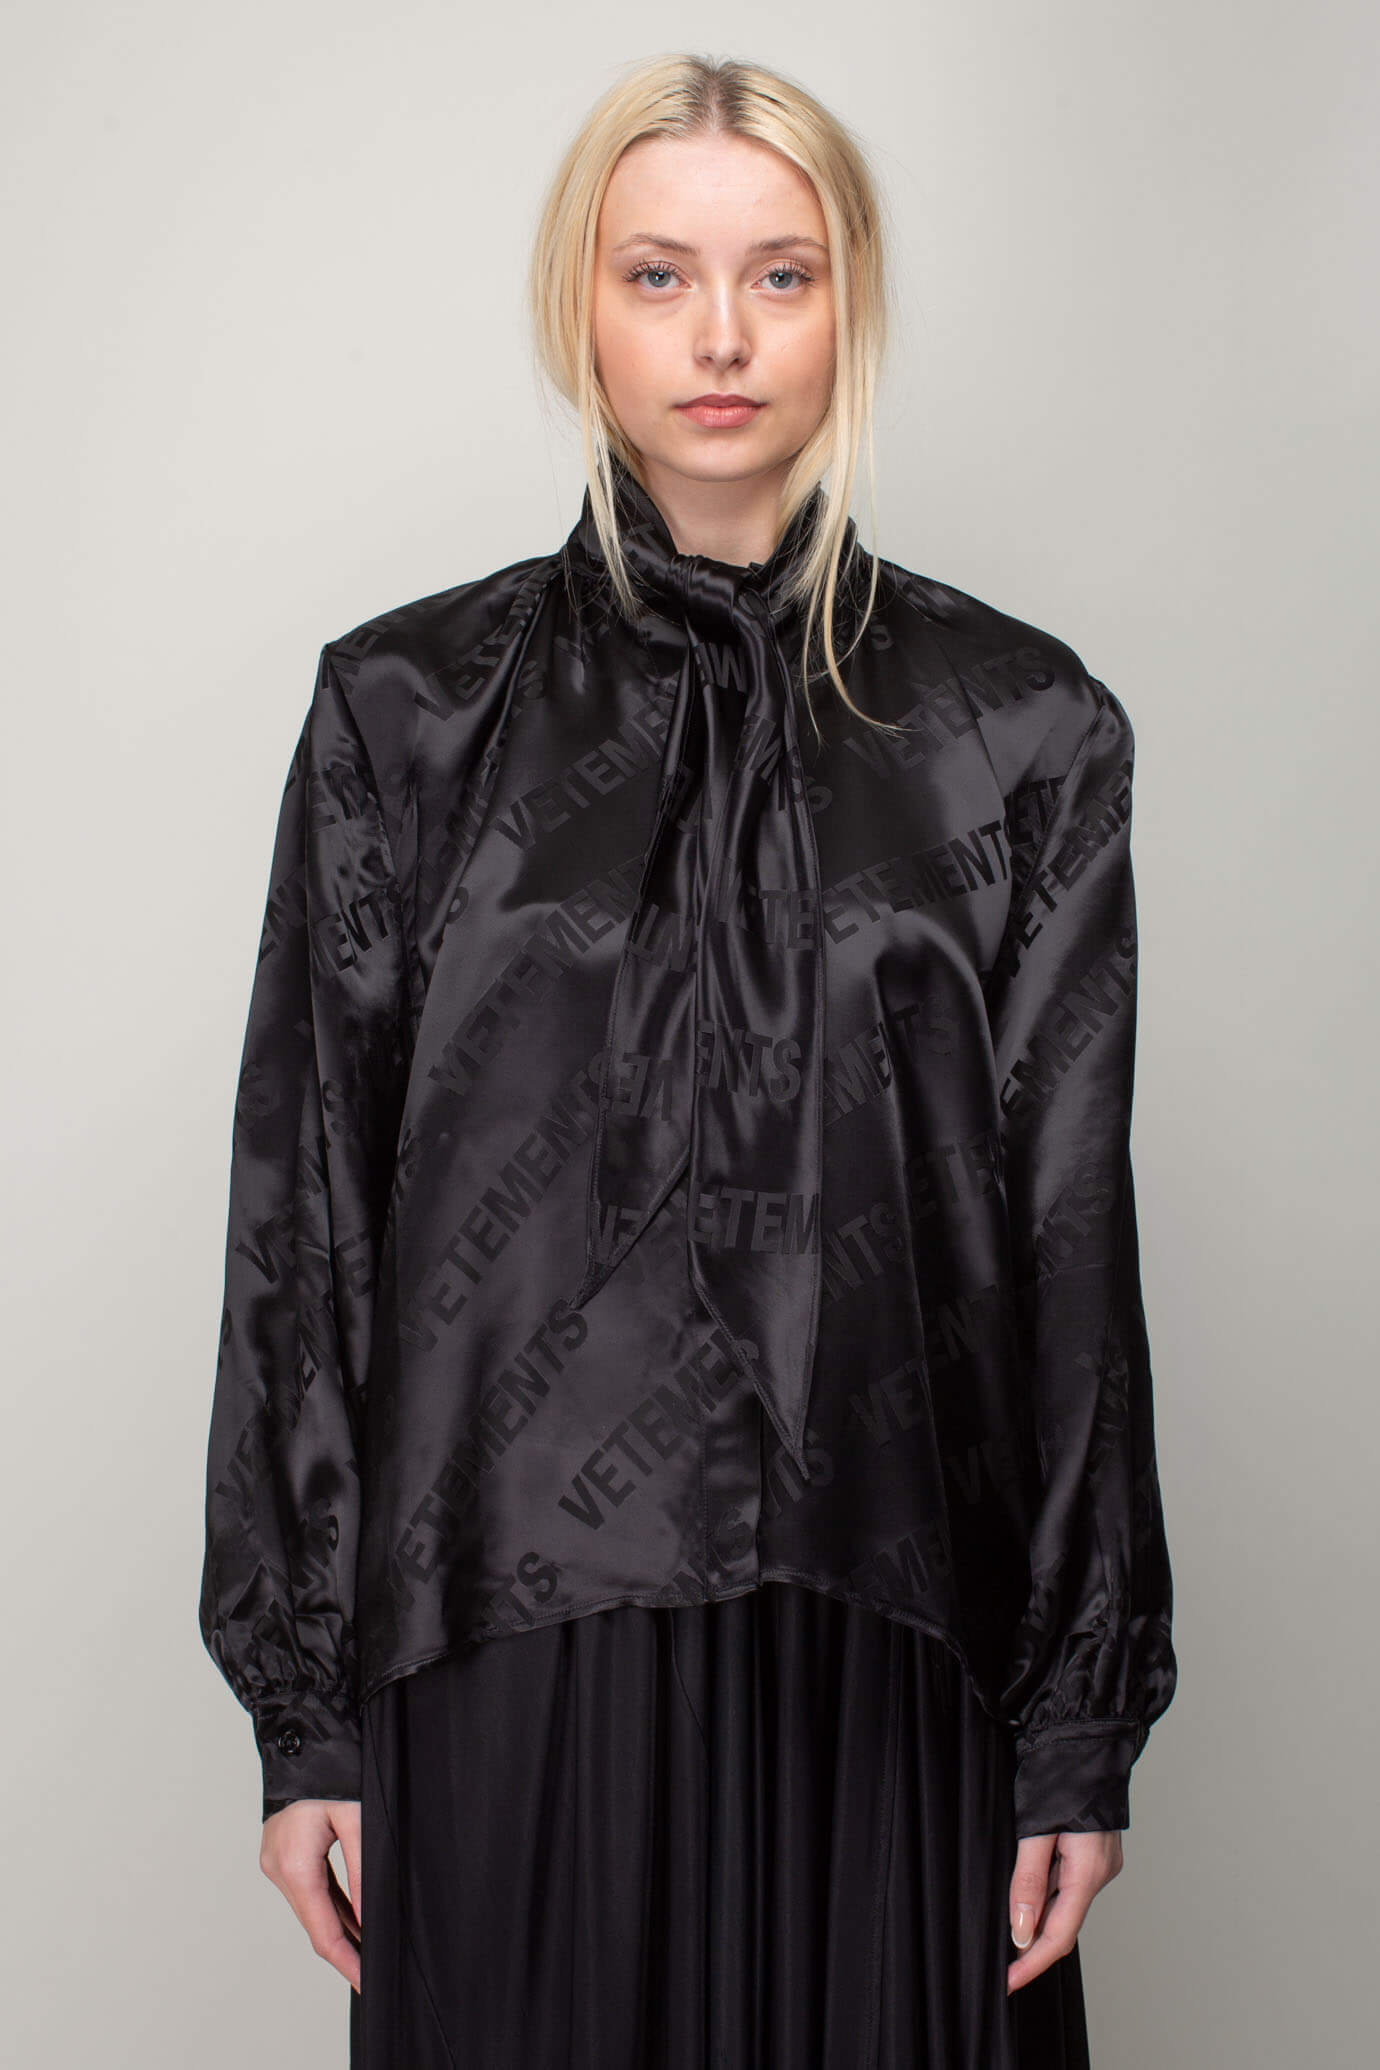 Monogram silk scarf blouse black